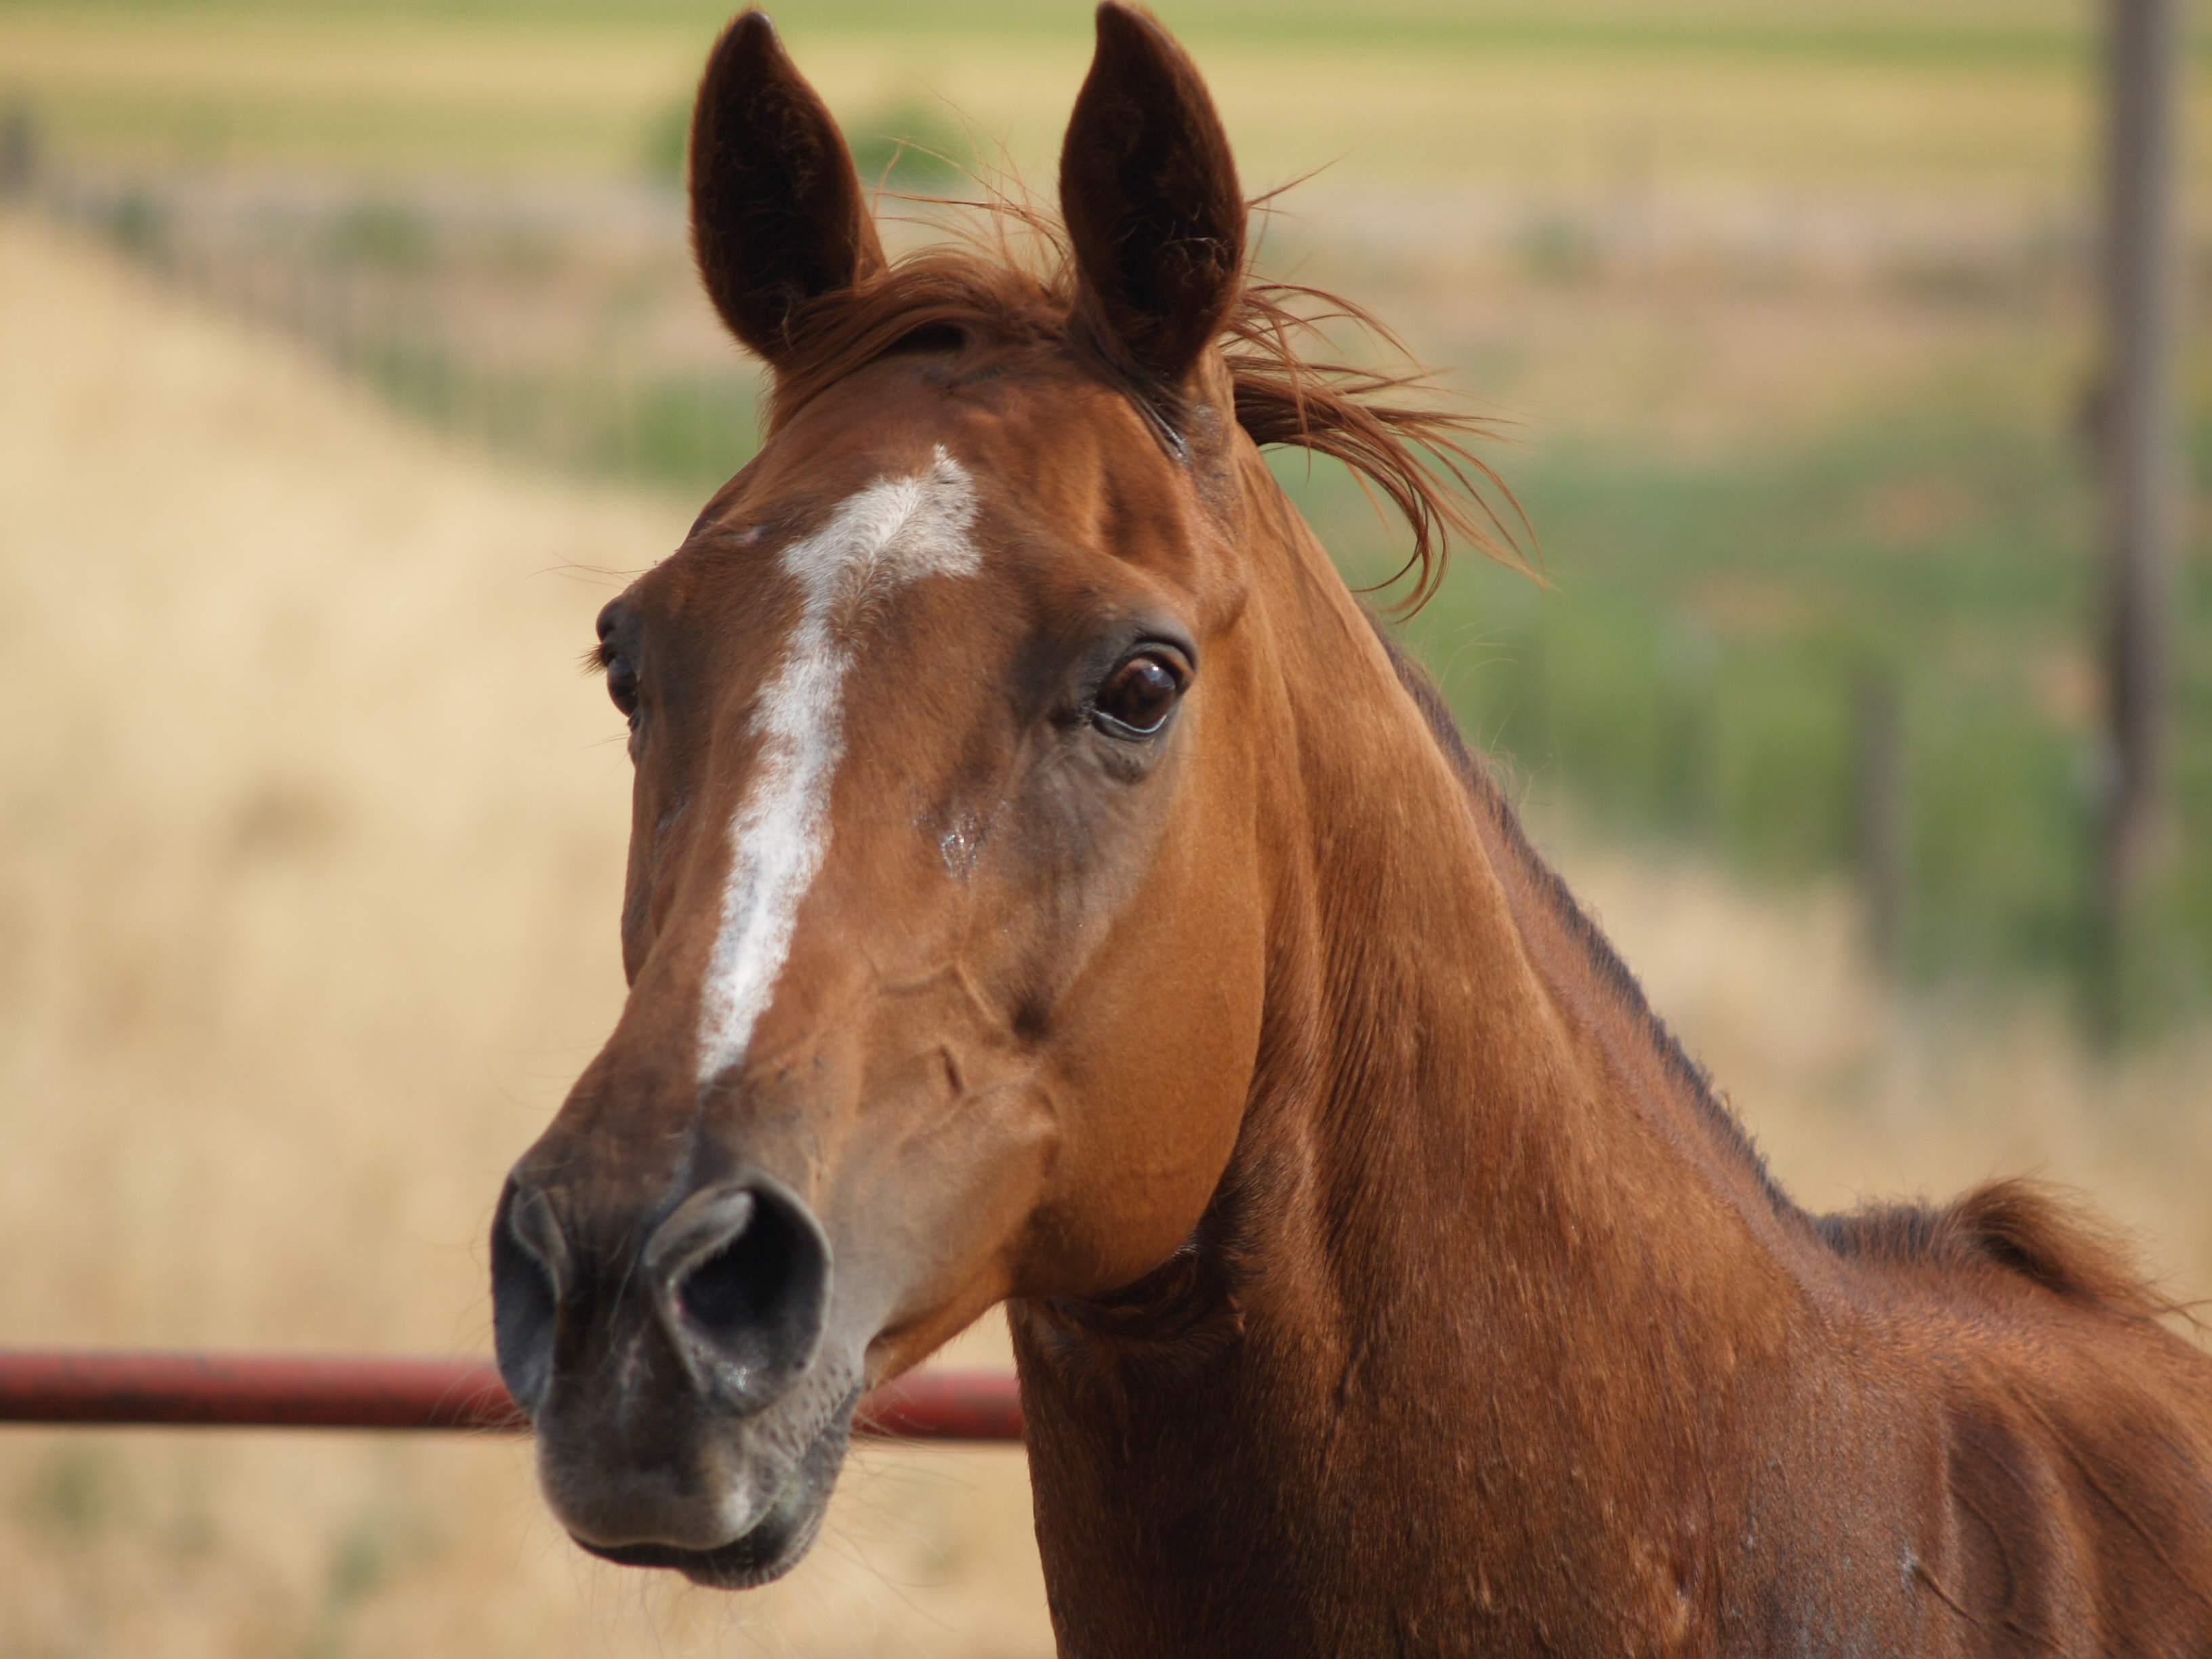 Horse head photo